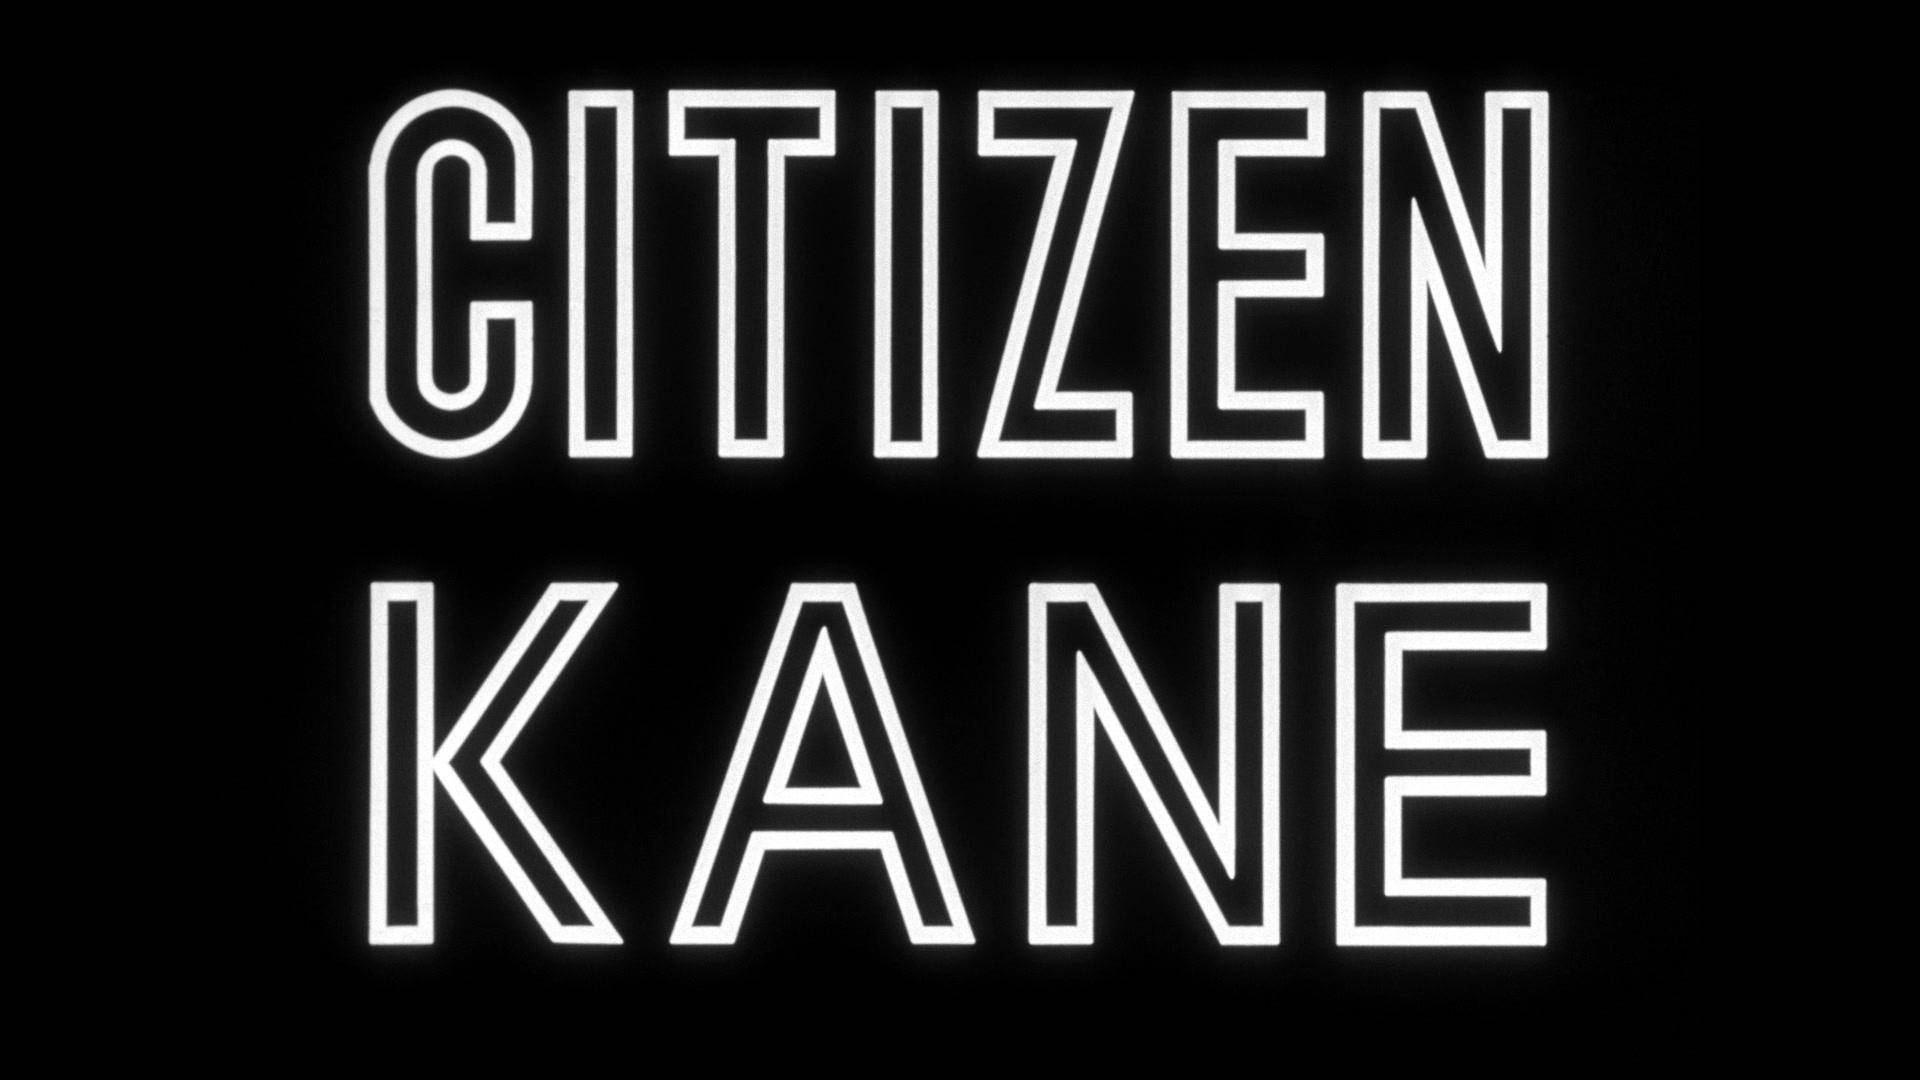 Citizen Kane Title Text